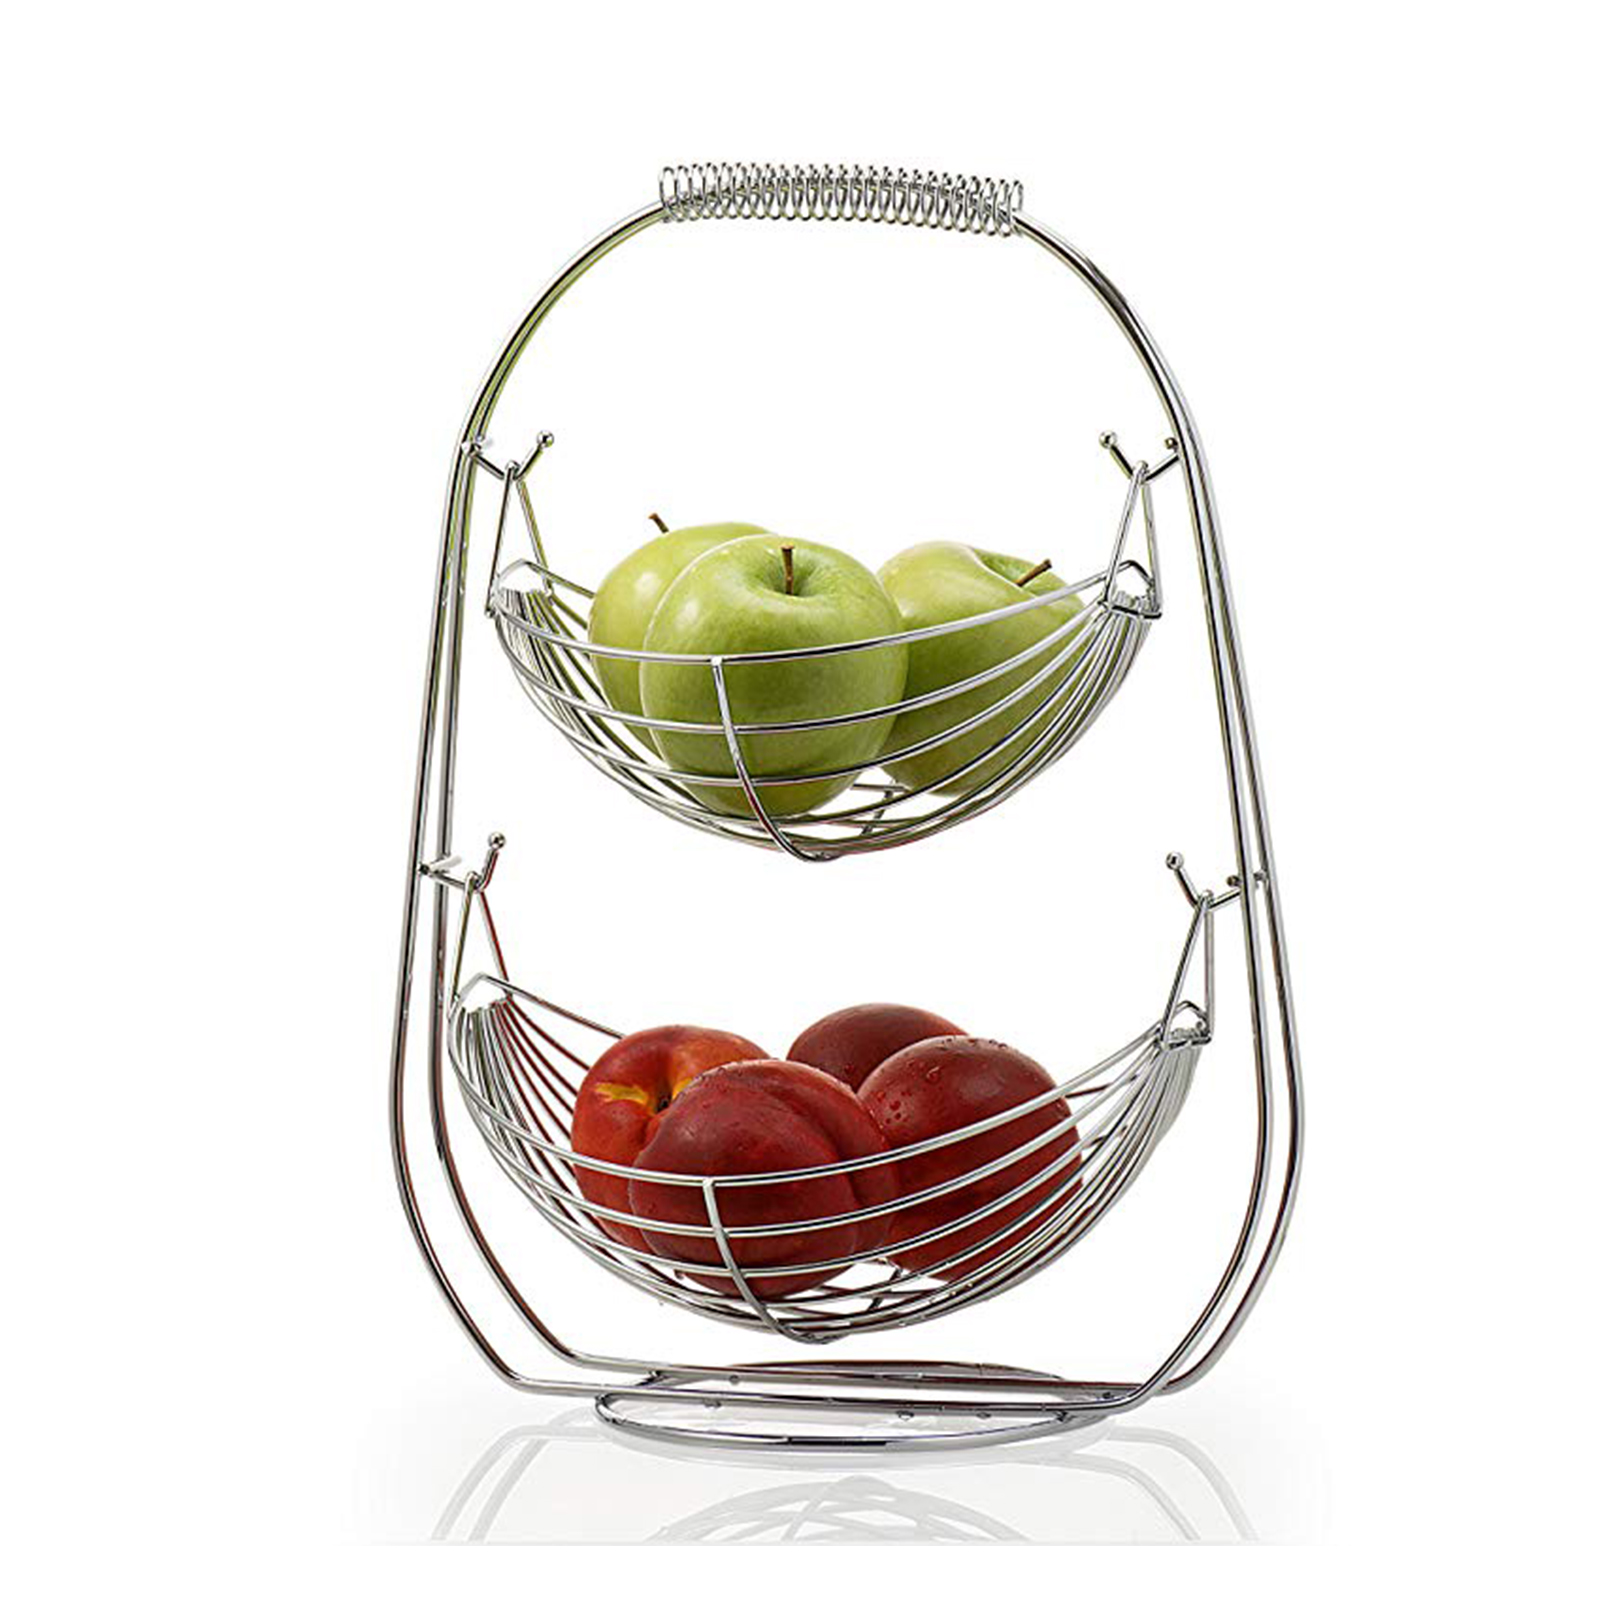 2 Tier Fruit Basket